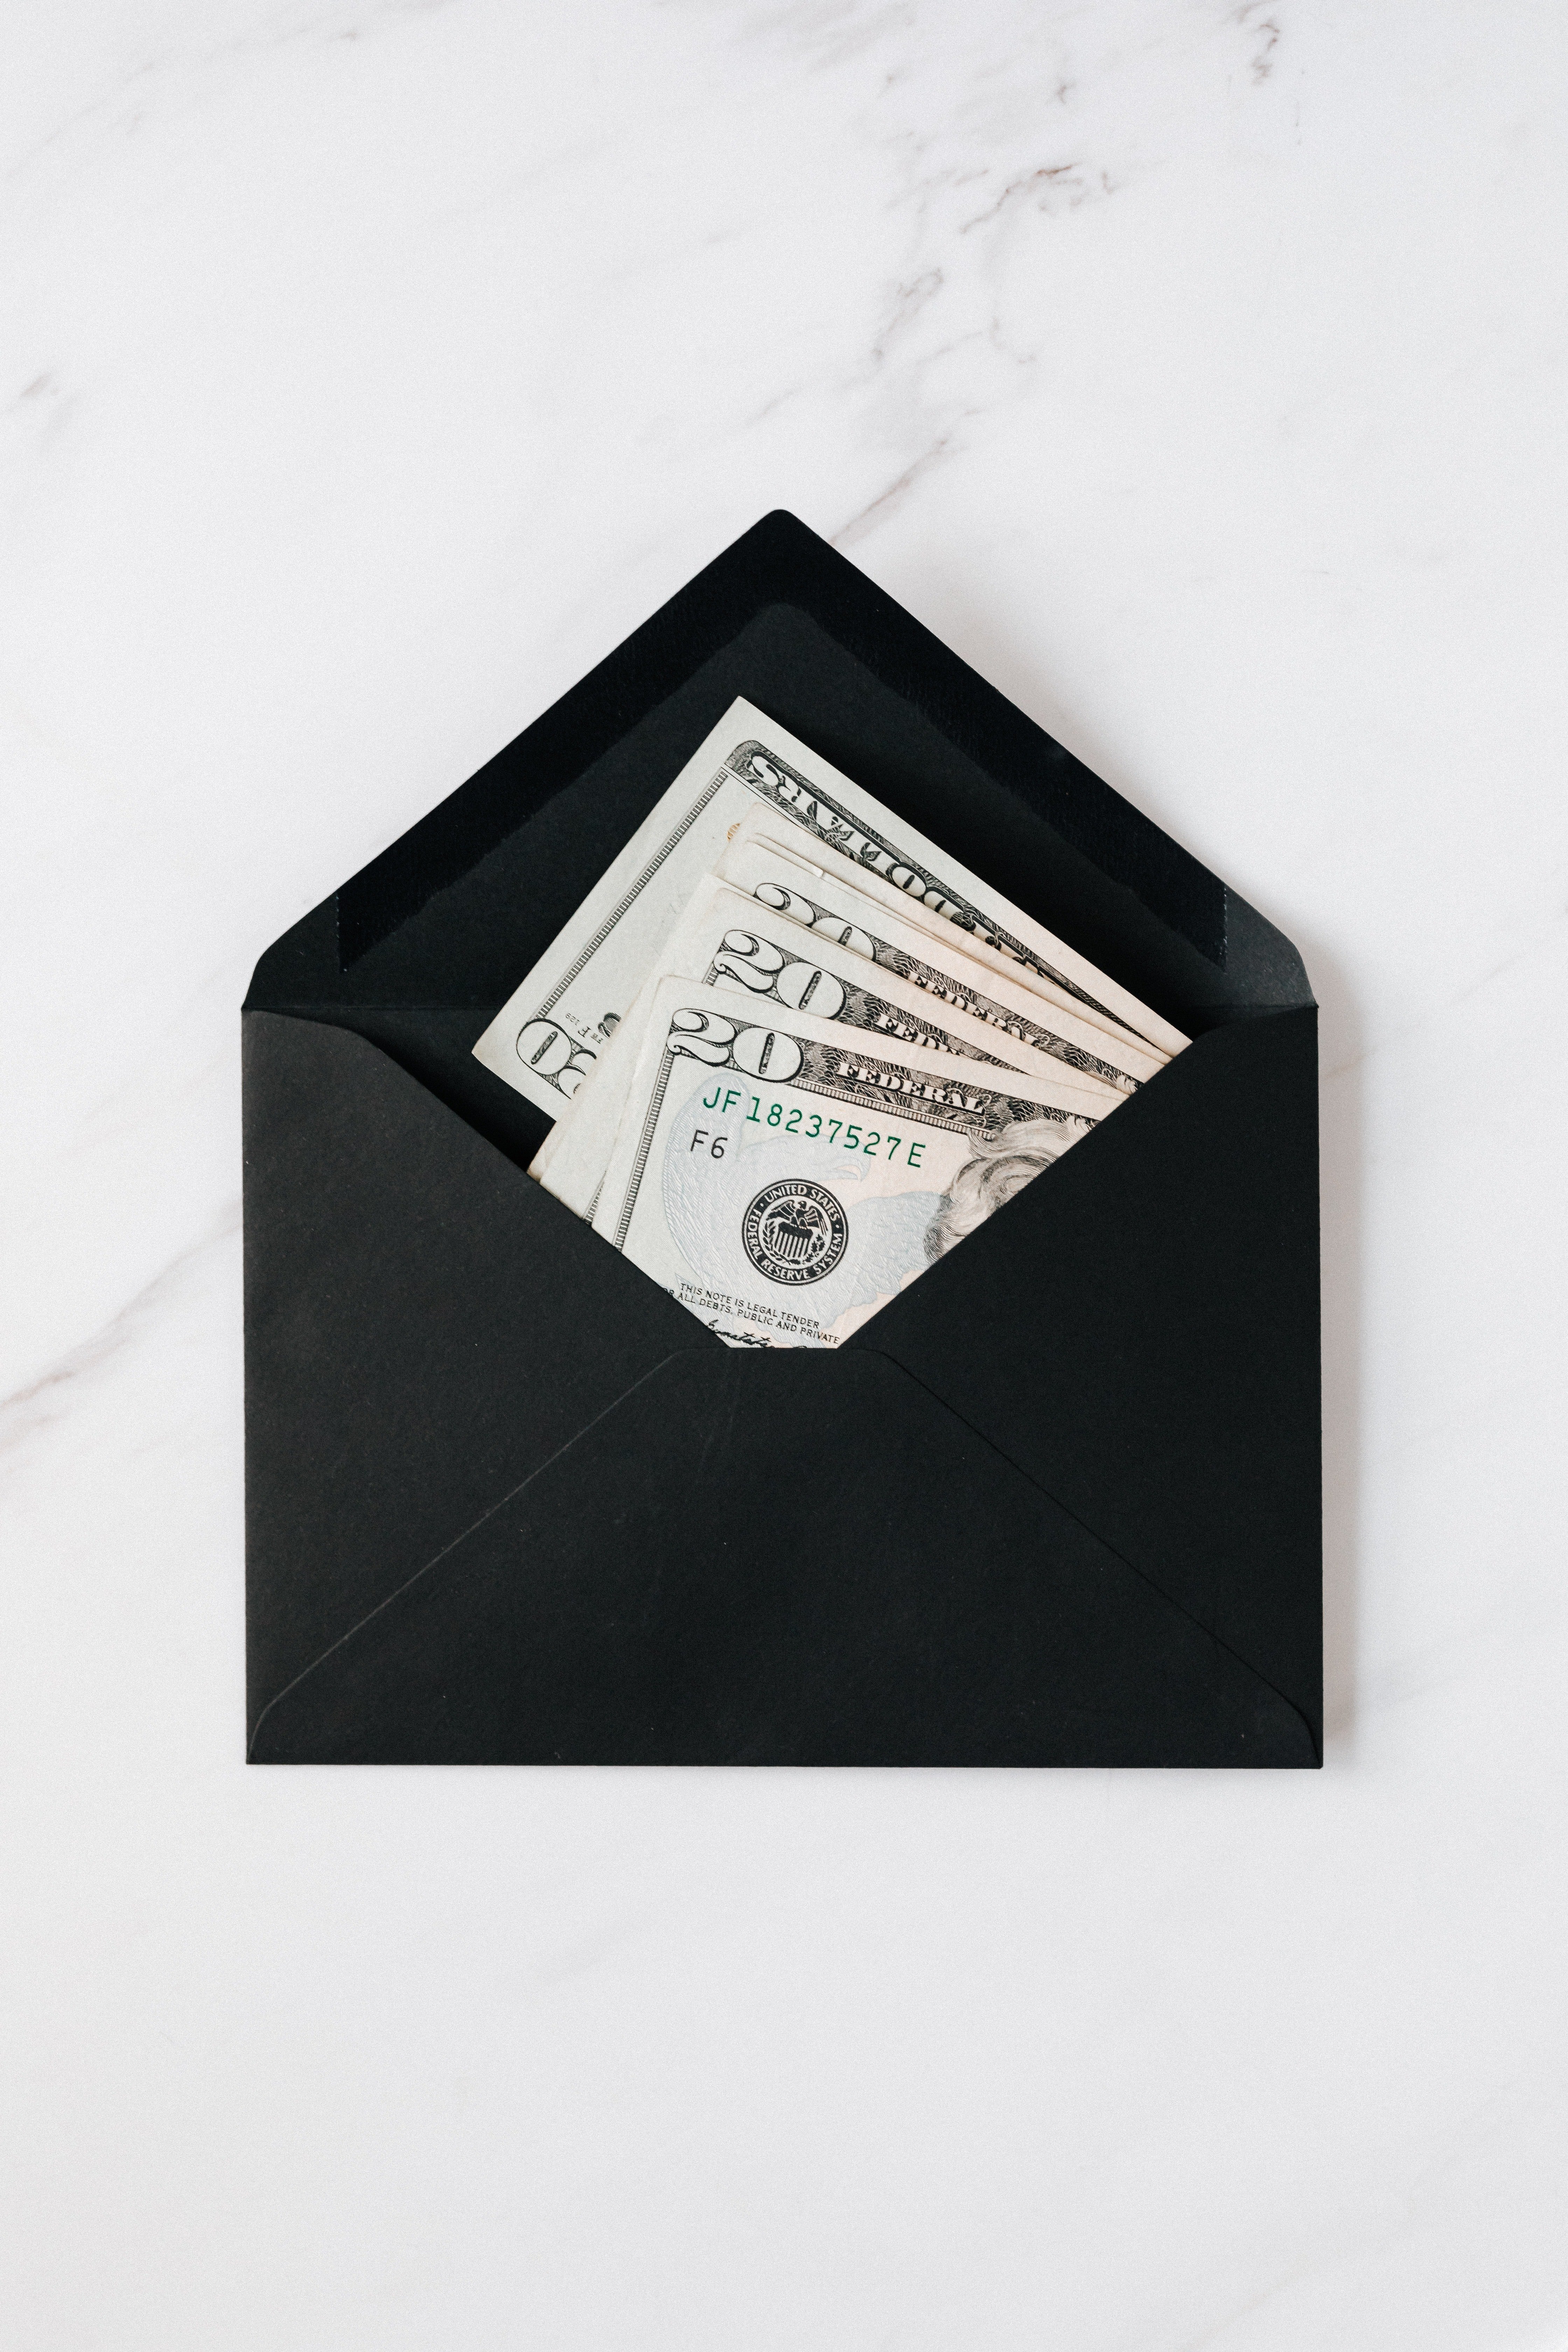 A photo of money in a black envelope. | Source: Pexels/ Karolina Grabowska